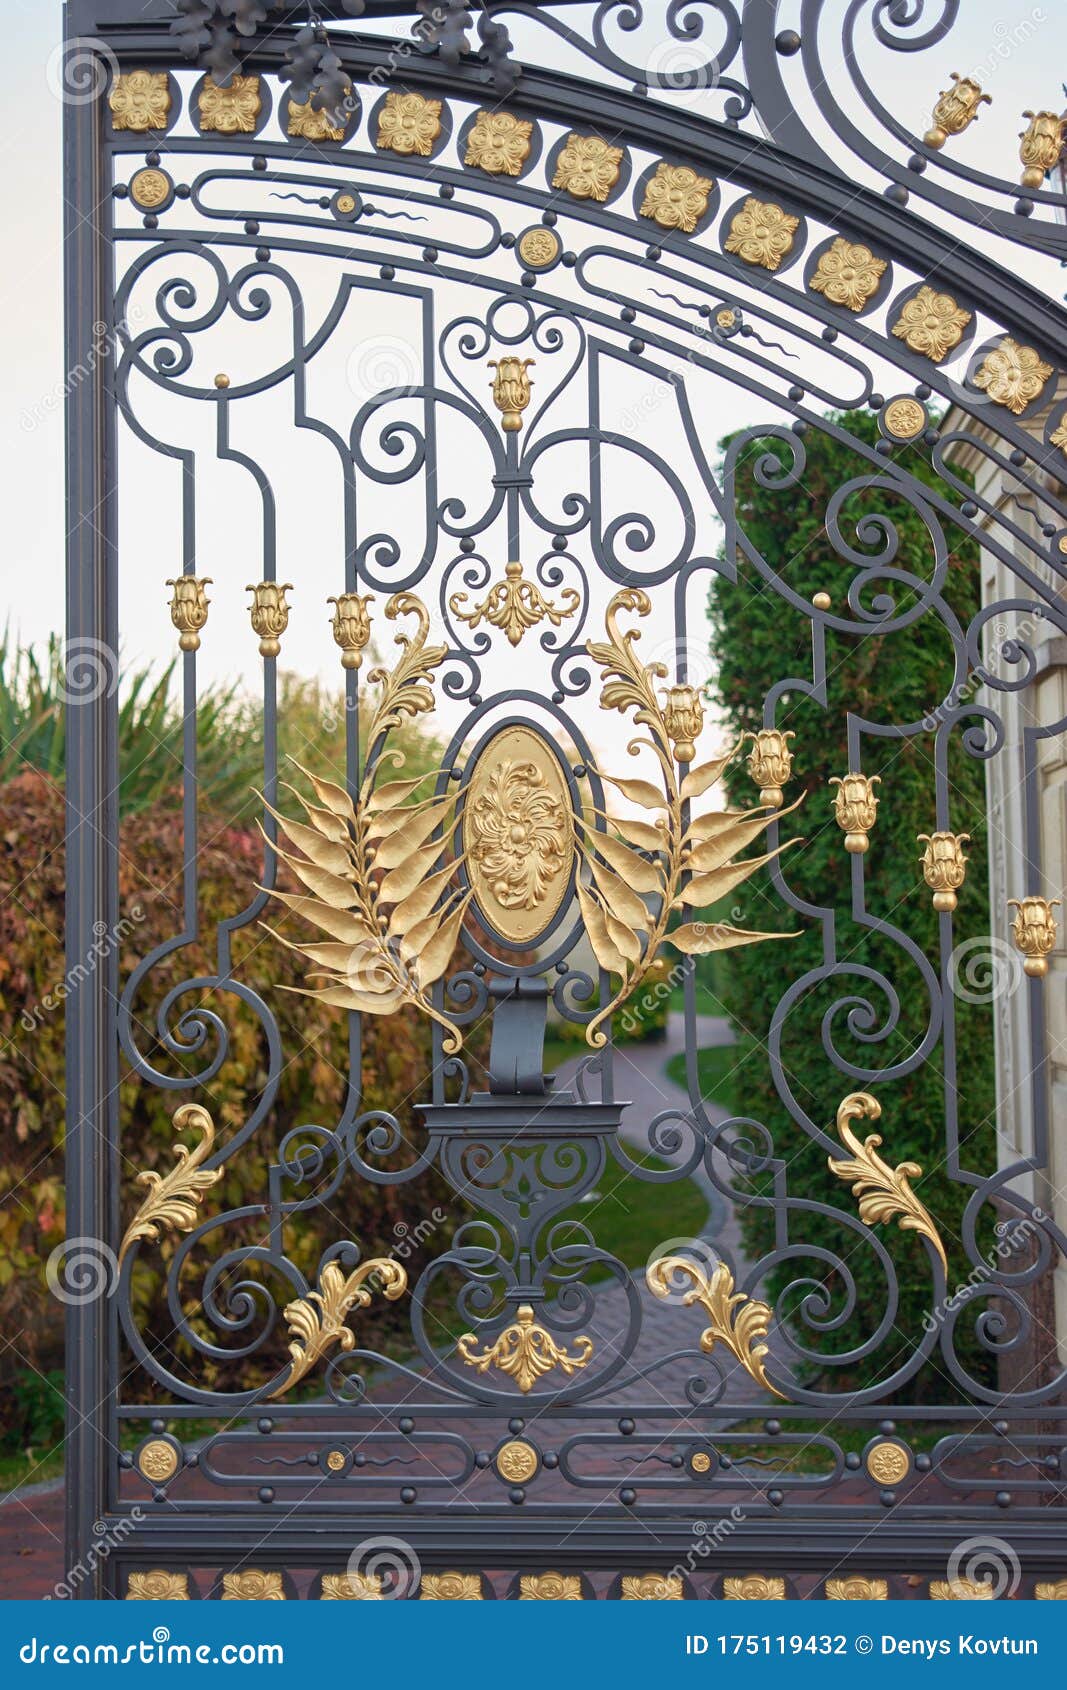 Decorative Ornamental City Park Gates. Stock Photo - Image of metal ...